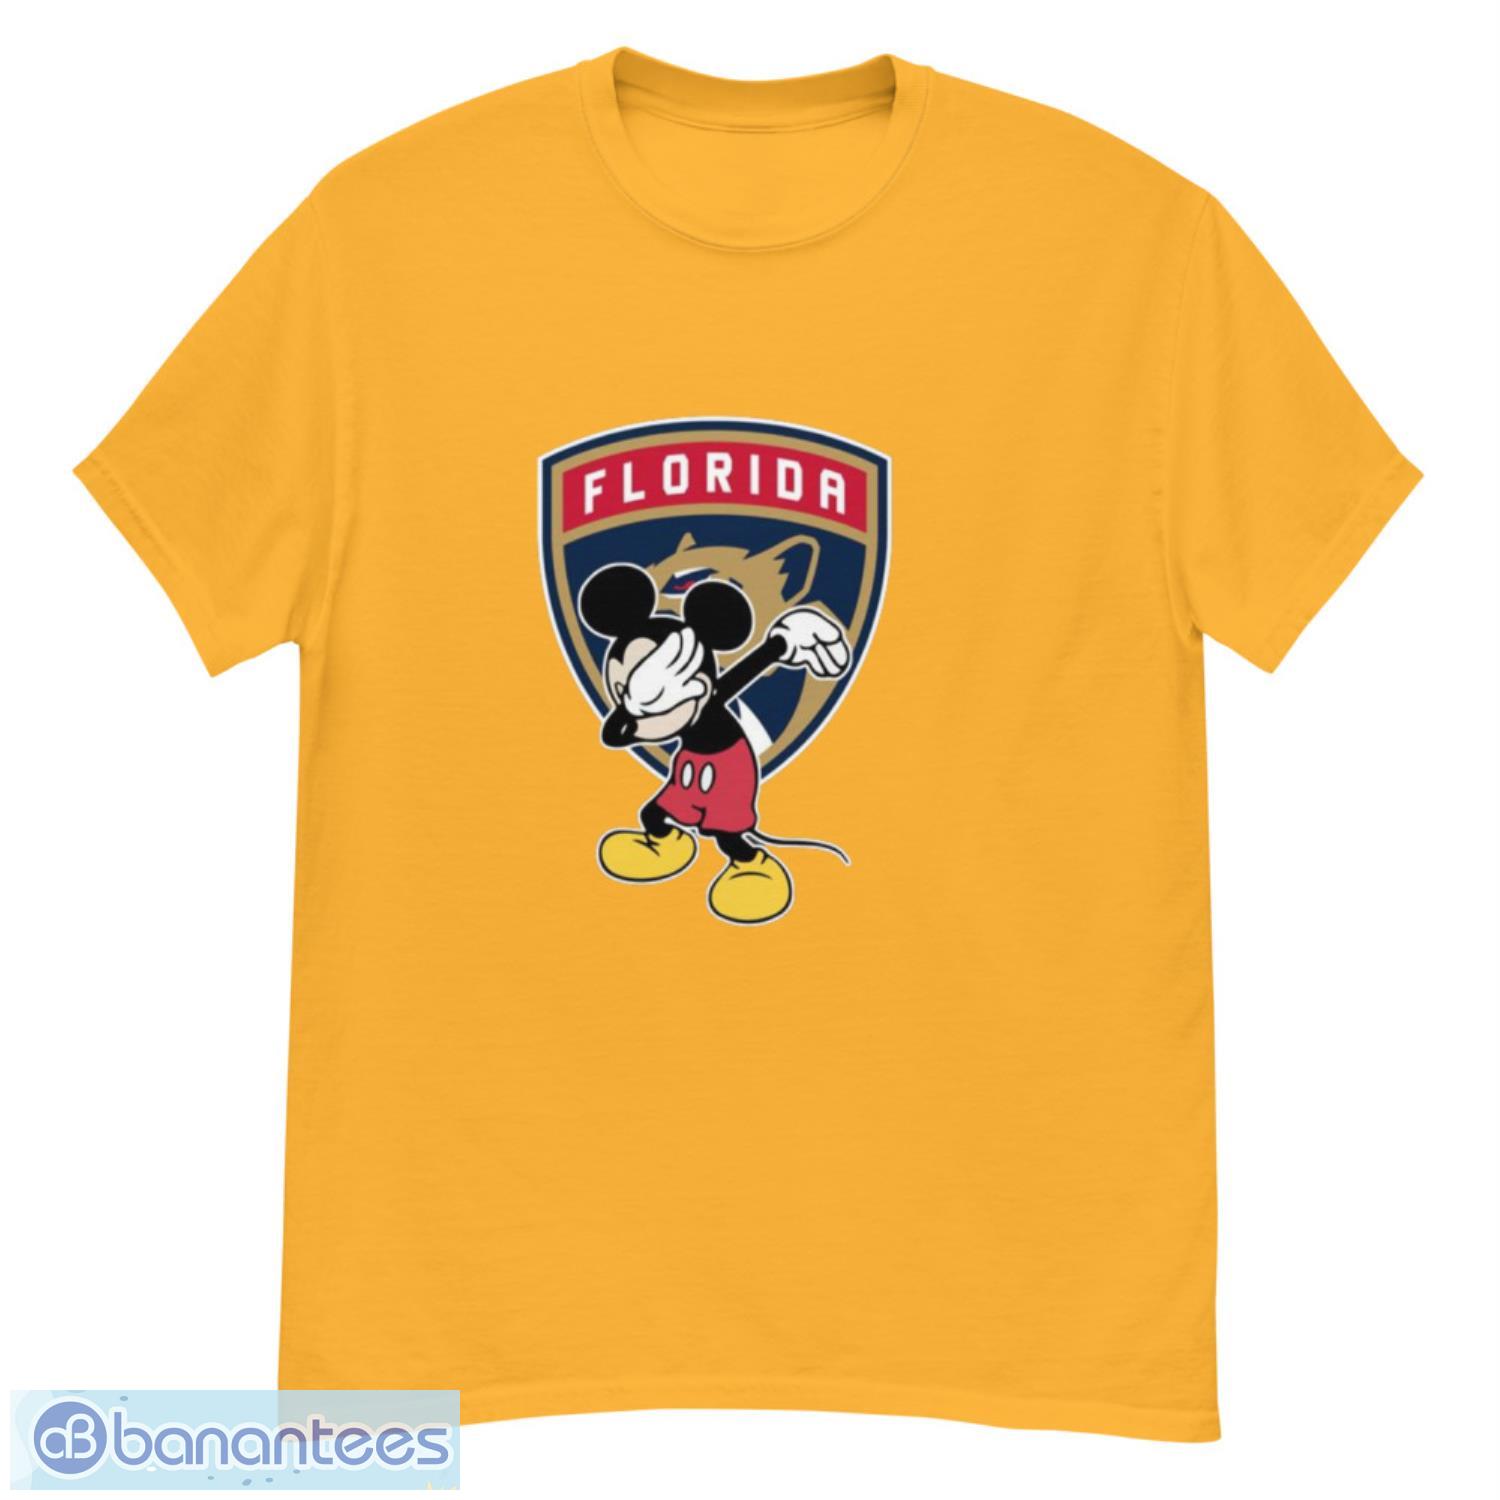 Toronto Maple Leafs NHL Hockey Dabbing Mickey Disney Sports T Shirt For Men  And Women